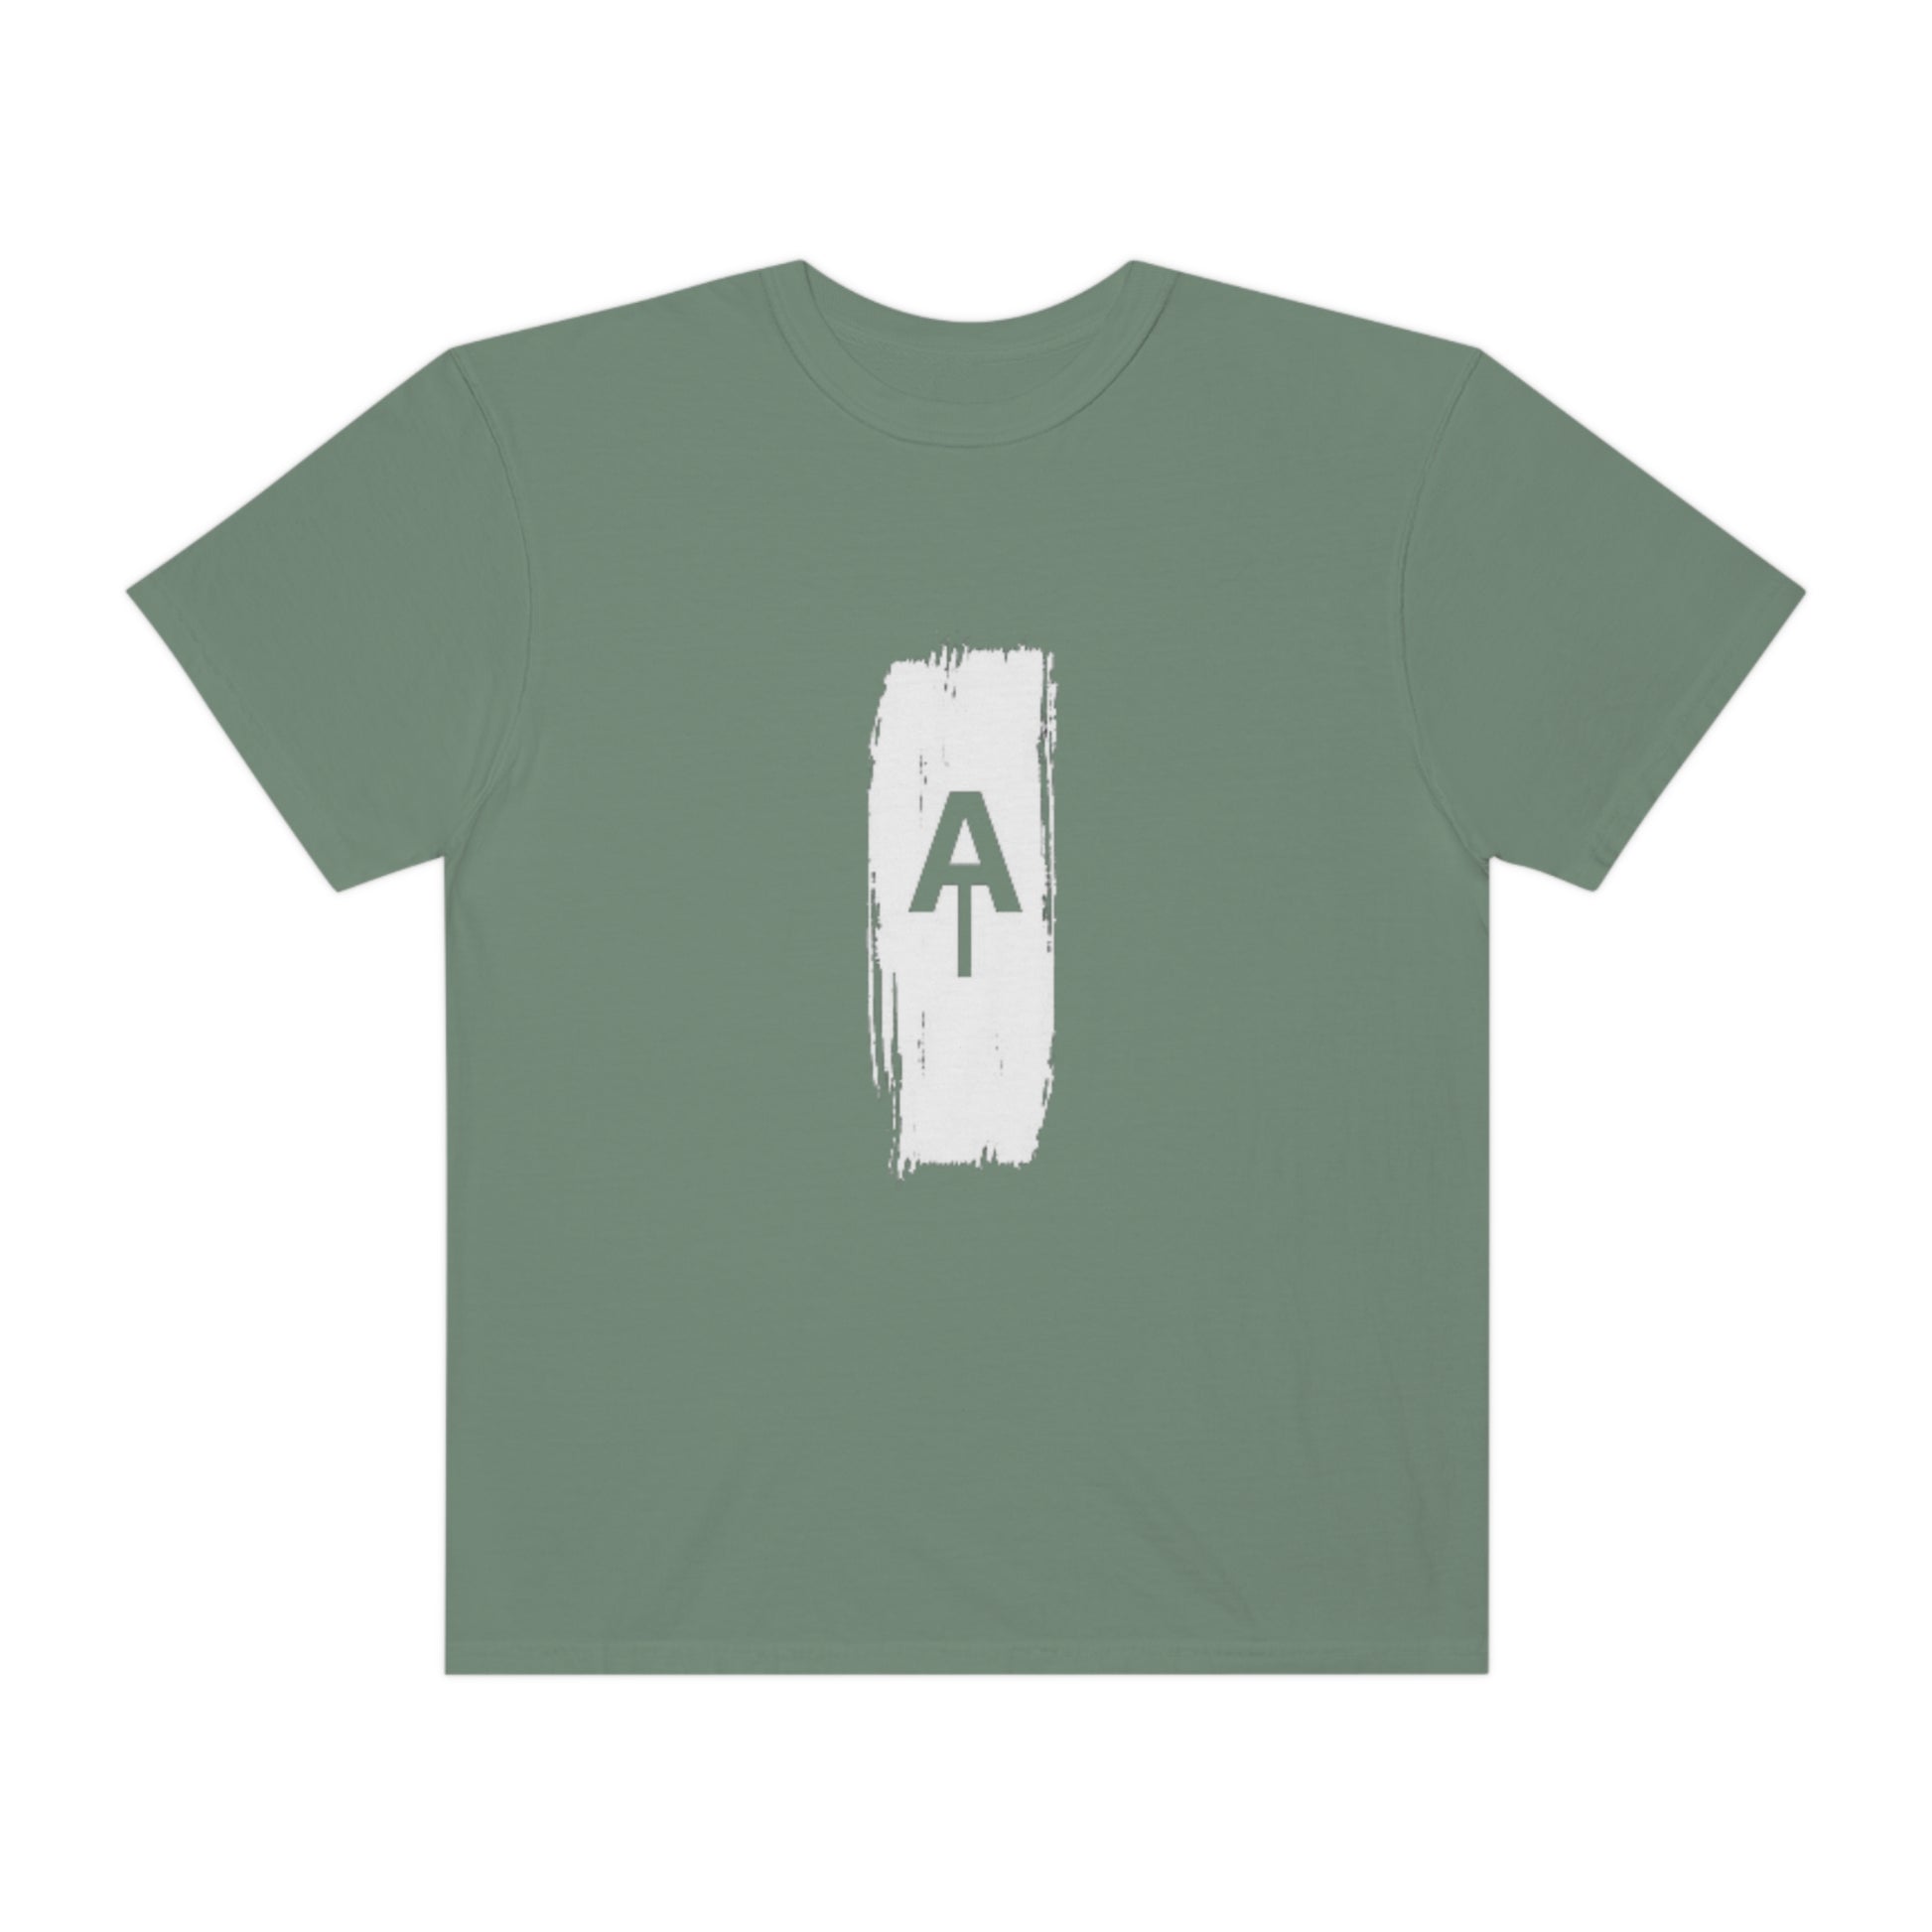 Appalachian Trail Comfort Colors t-shirt, North Carolina Appalachian shirt, Blaze AT Shirt, Appalachian Trail Blaze shirt, Appalachian Trail apparel, Appalachian Trail shirt, Shirt for Appalachian Trail, Shirt for hiking, Shirt for hikers, Gift for hikers